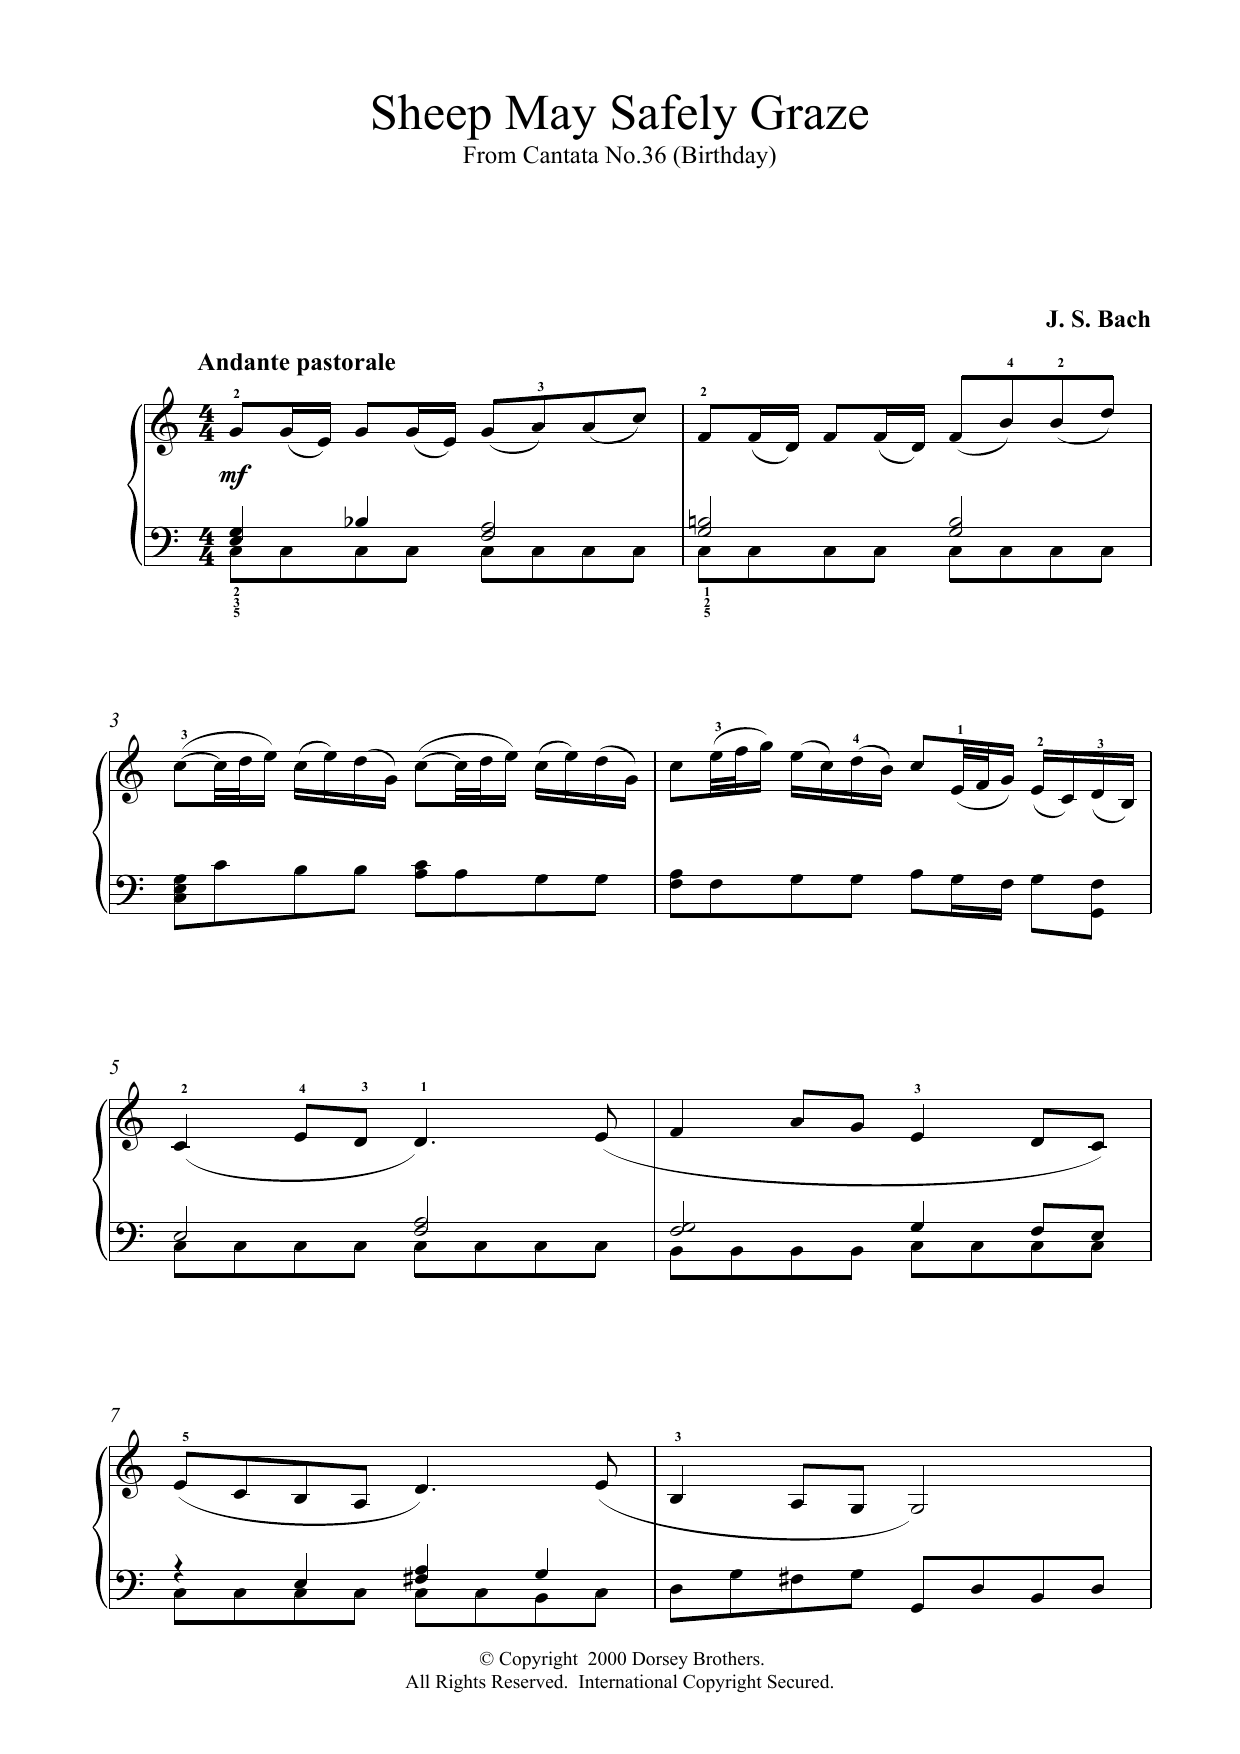 Johann Sebastian Bach Sheep May Safely Graze sheet music notes printable PDF score